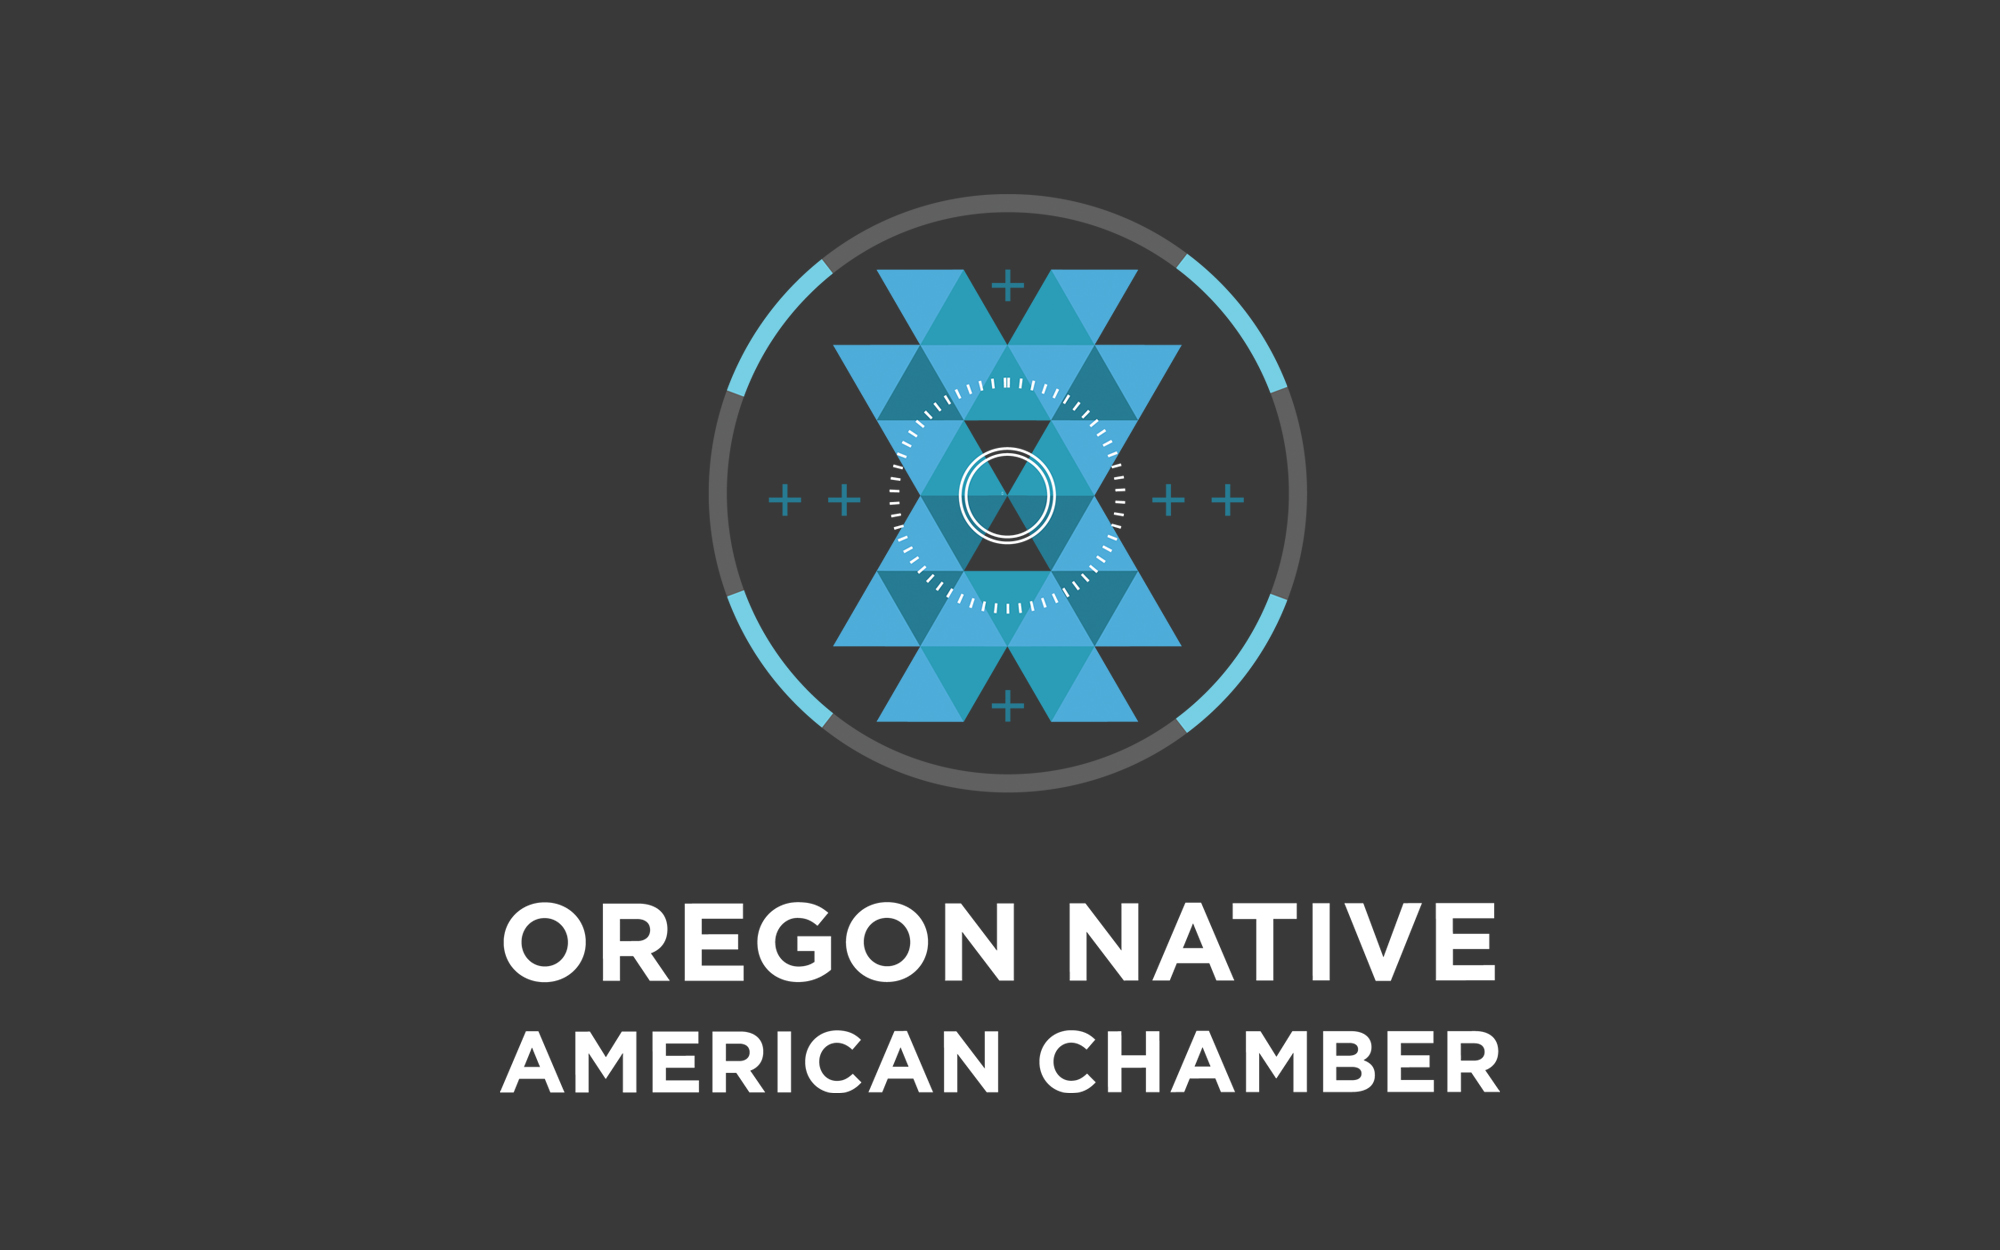 Oregan Native American Chamber identity by Digital Navajo / Victor Pascual.